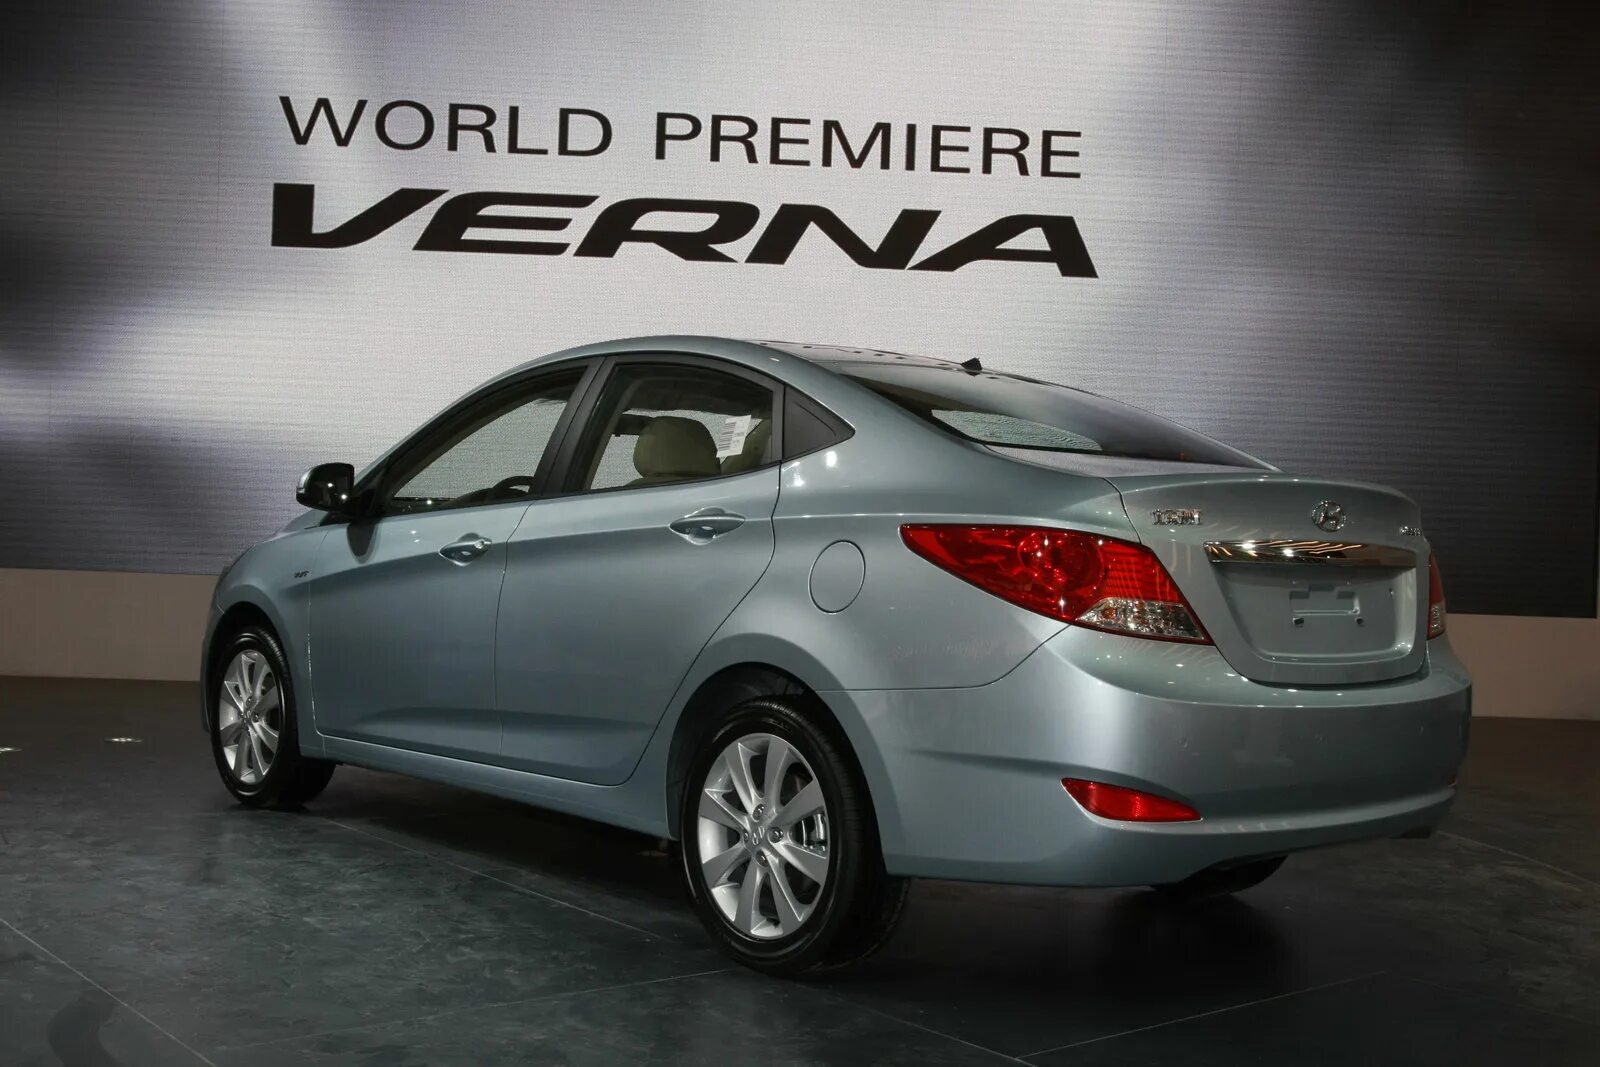 Купить хундай в омске. Hyundai Verna (Хендай верна). Hyundai Verna 2010. Hyundai Accent Verna. Hyundai Verna 2012.